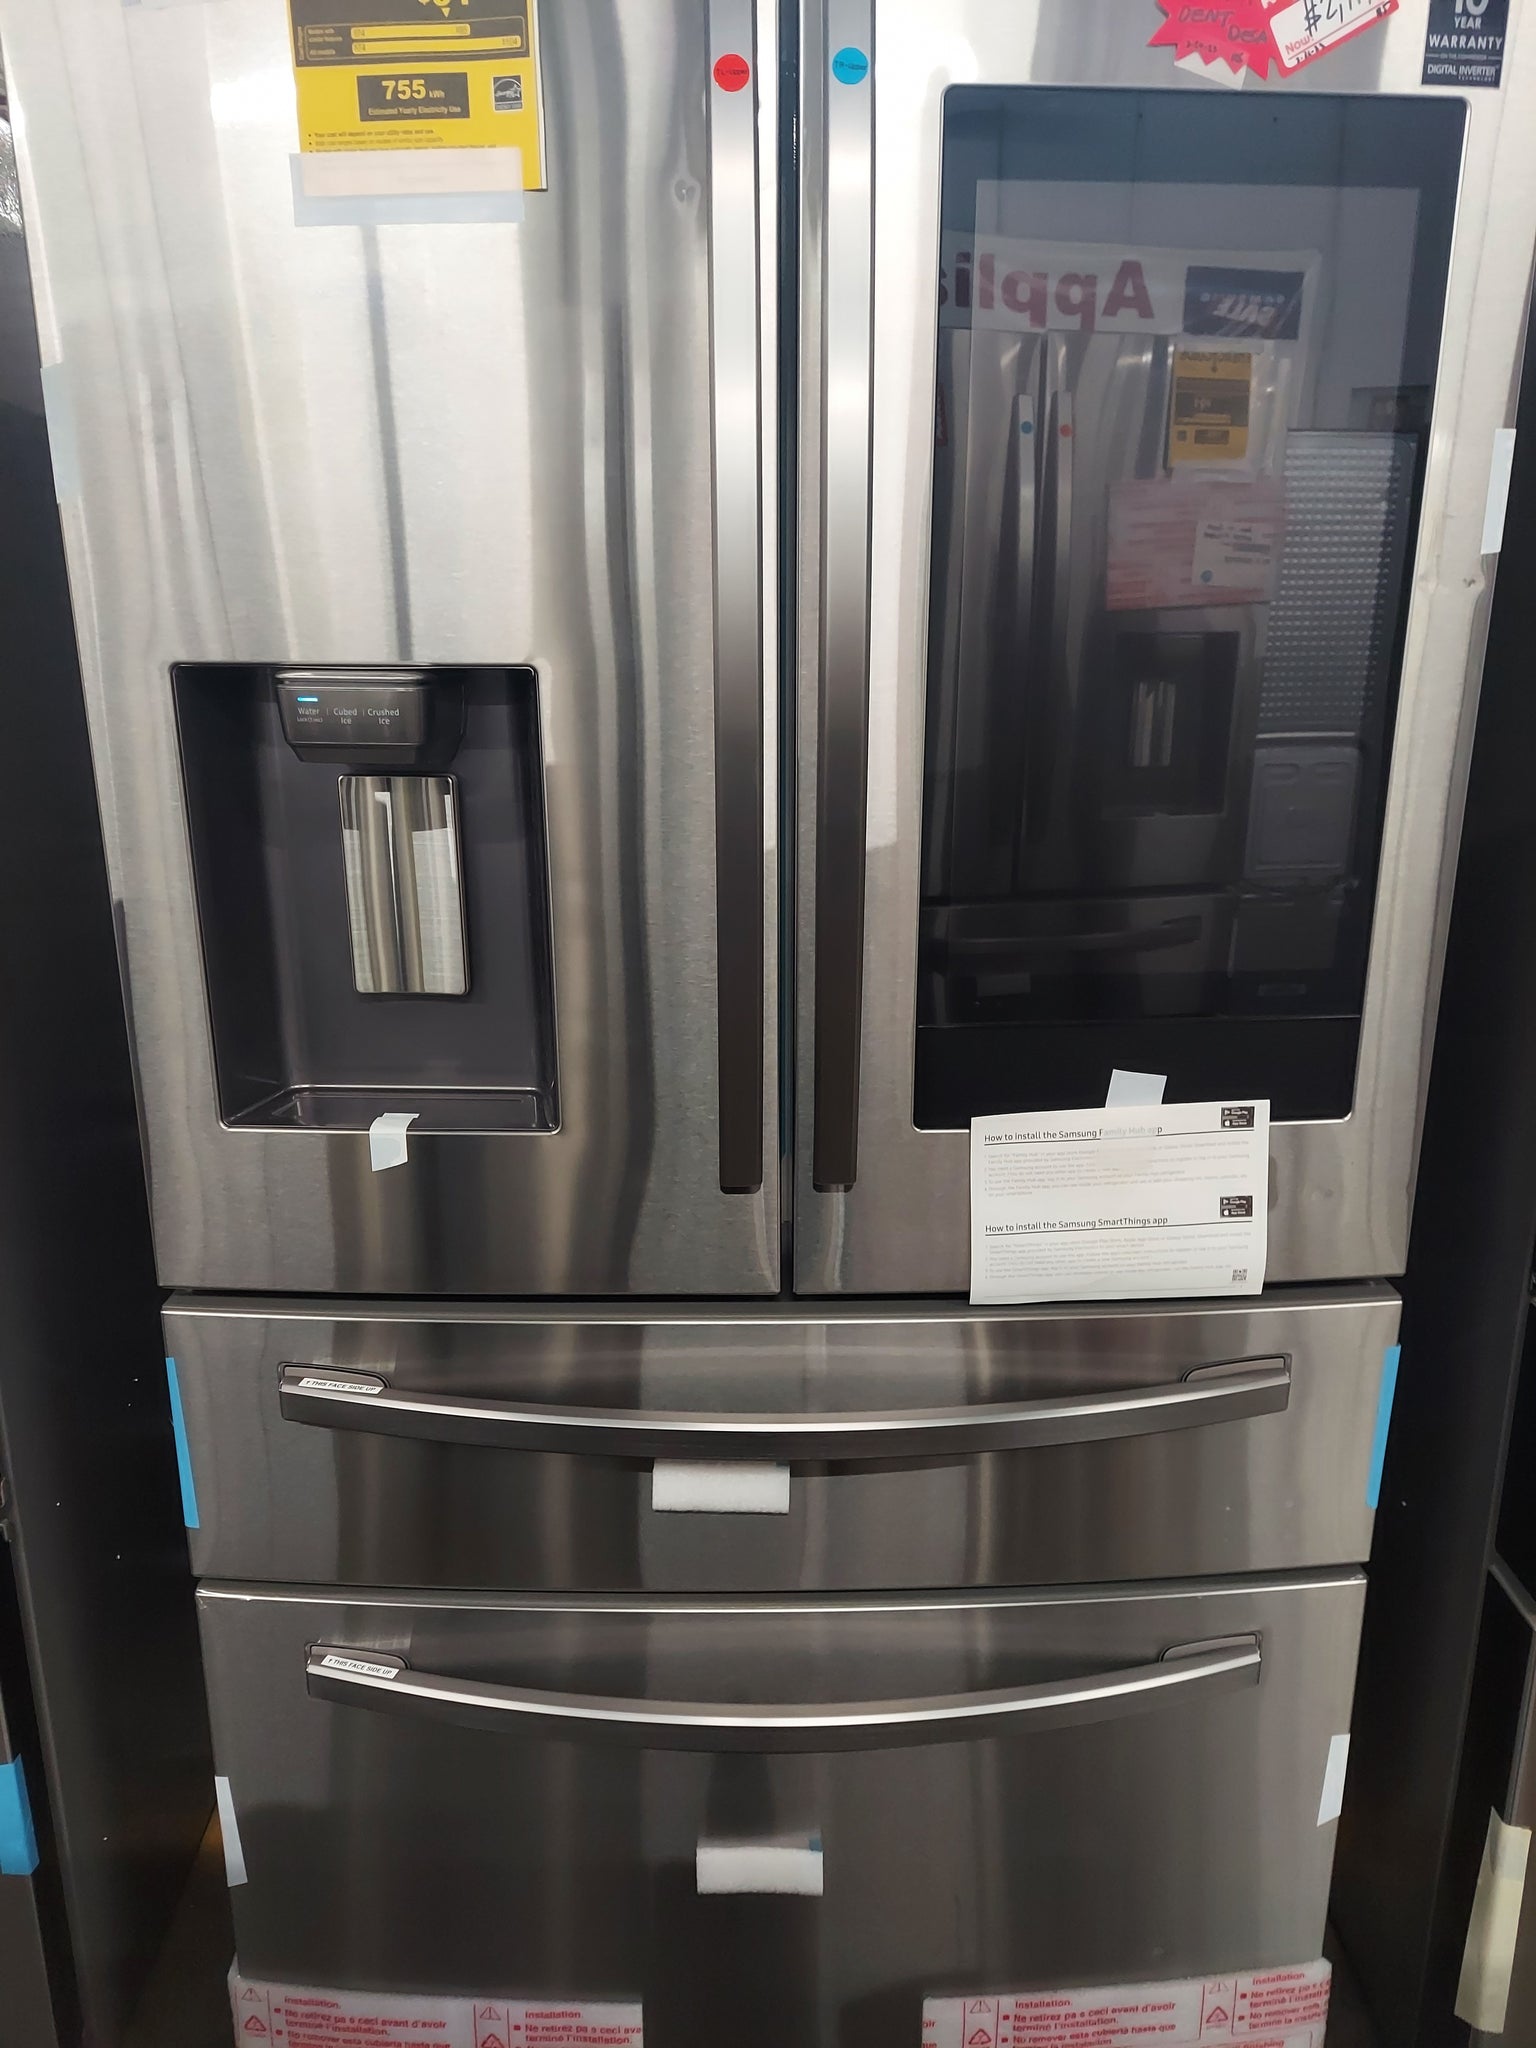 Samsung (RF28R7551SR) 36 Inch French Door Refrigerator with 28 cu. ft. Capacity